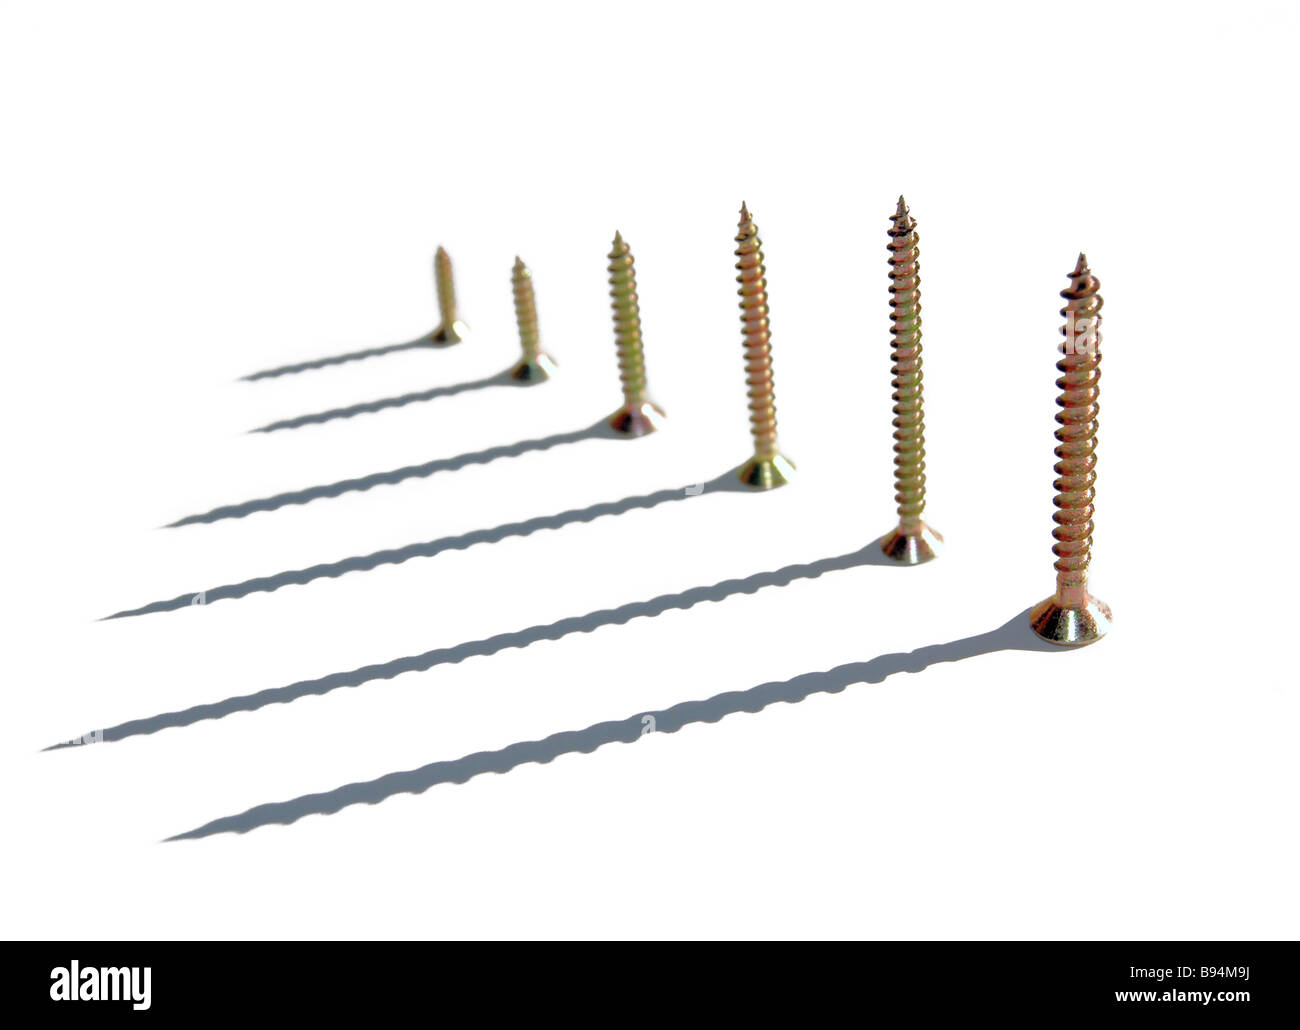 A line of receding screws and their shadows. Stock Photo